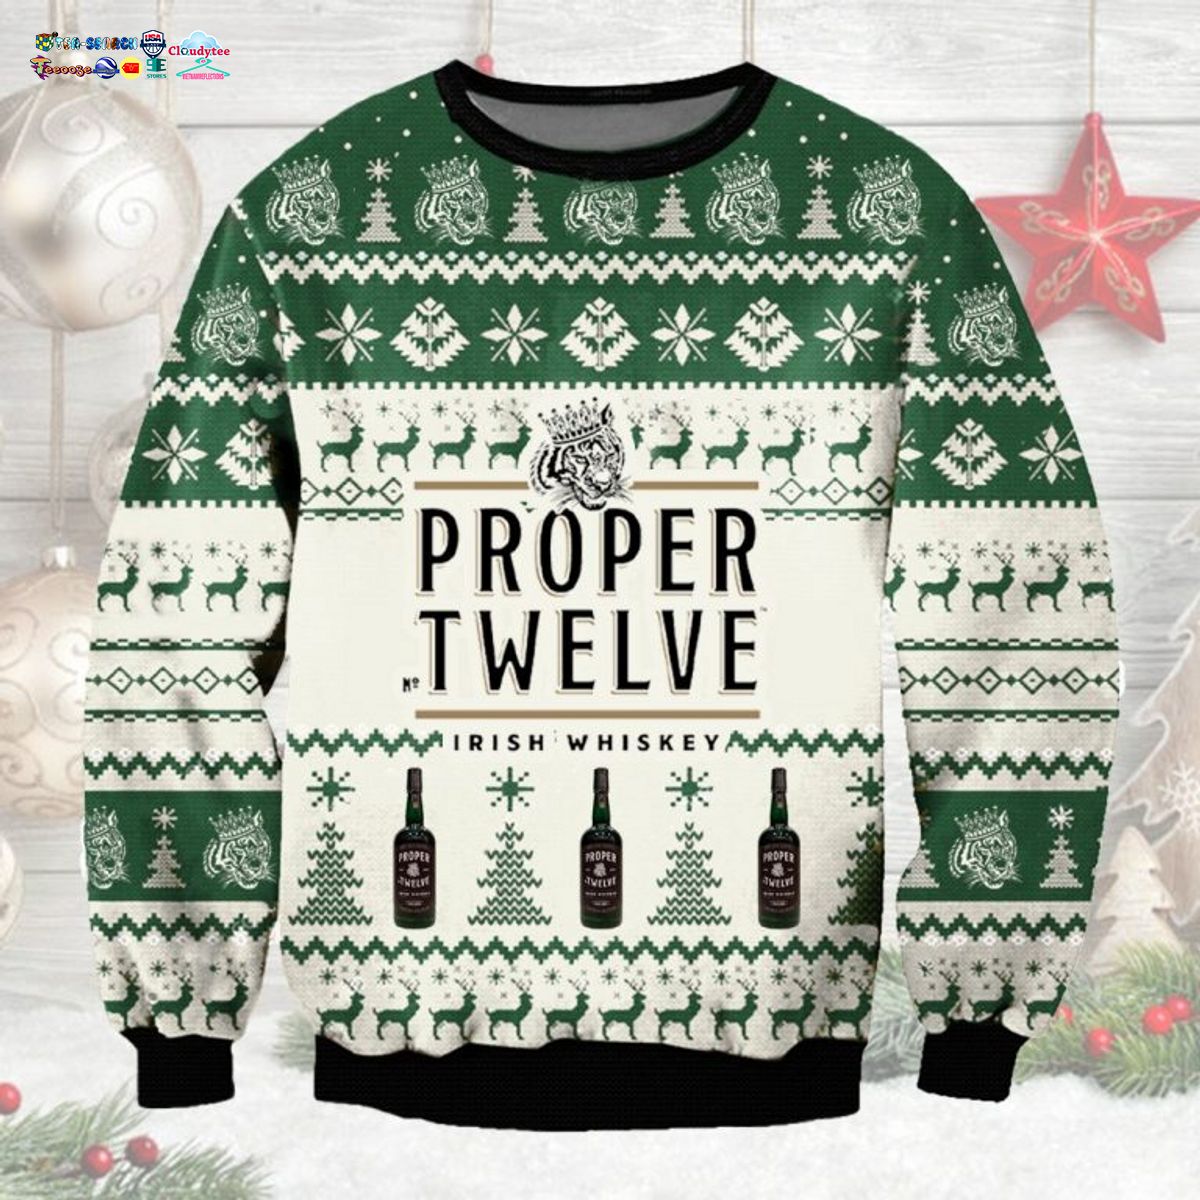 Proper Twelve Ugly Christmas Sweater - Damn good